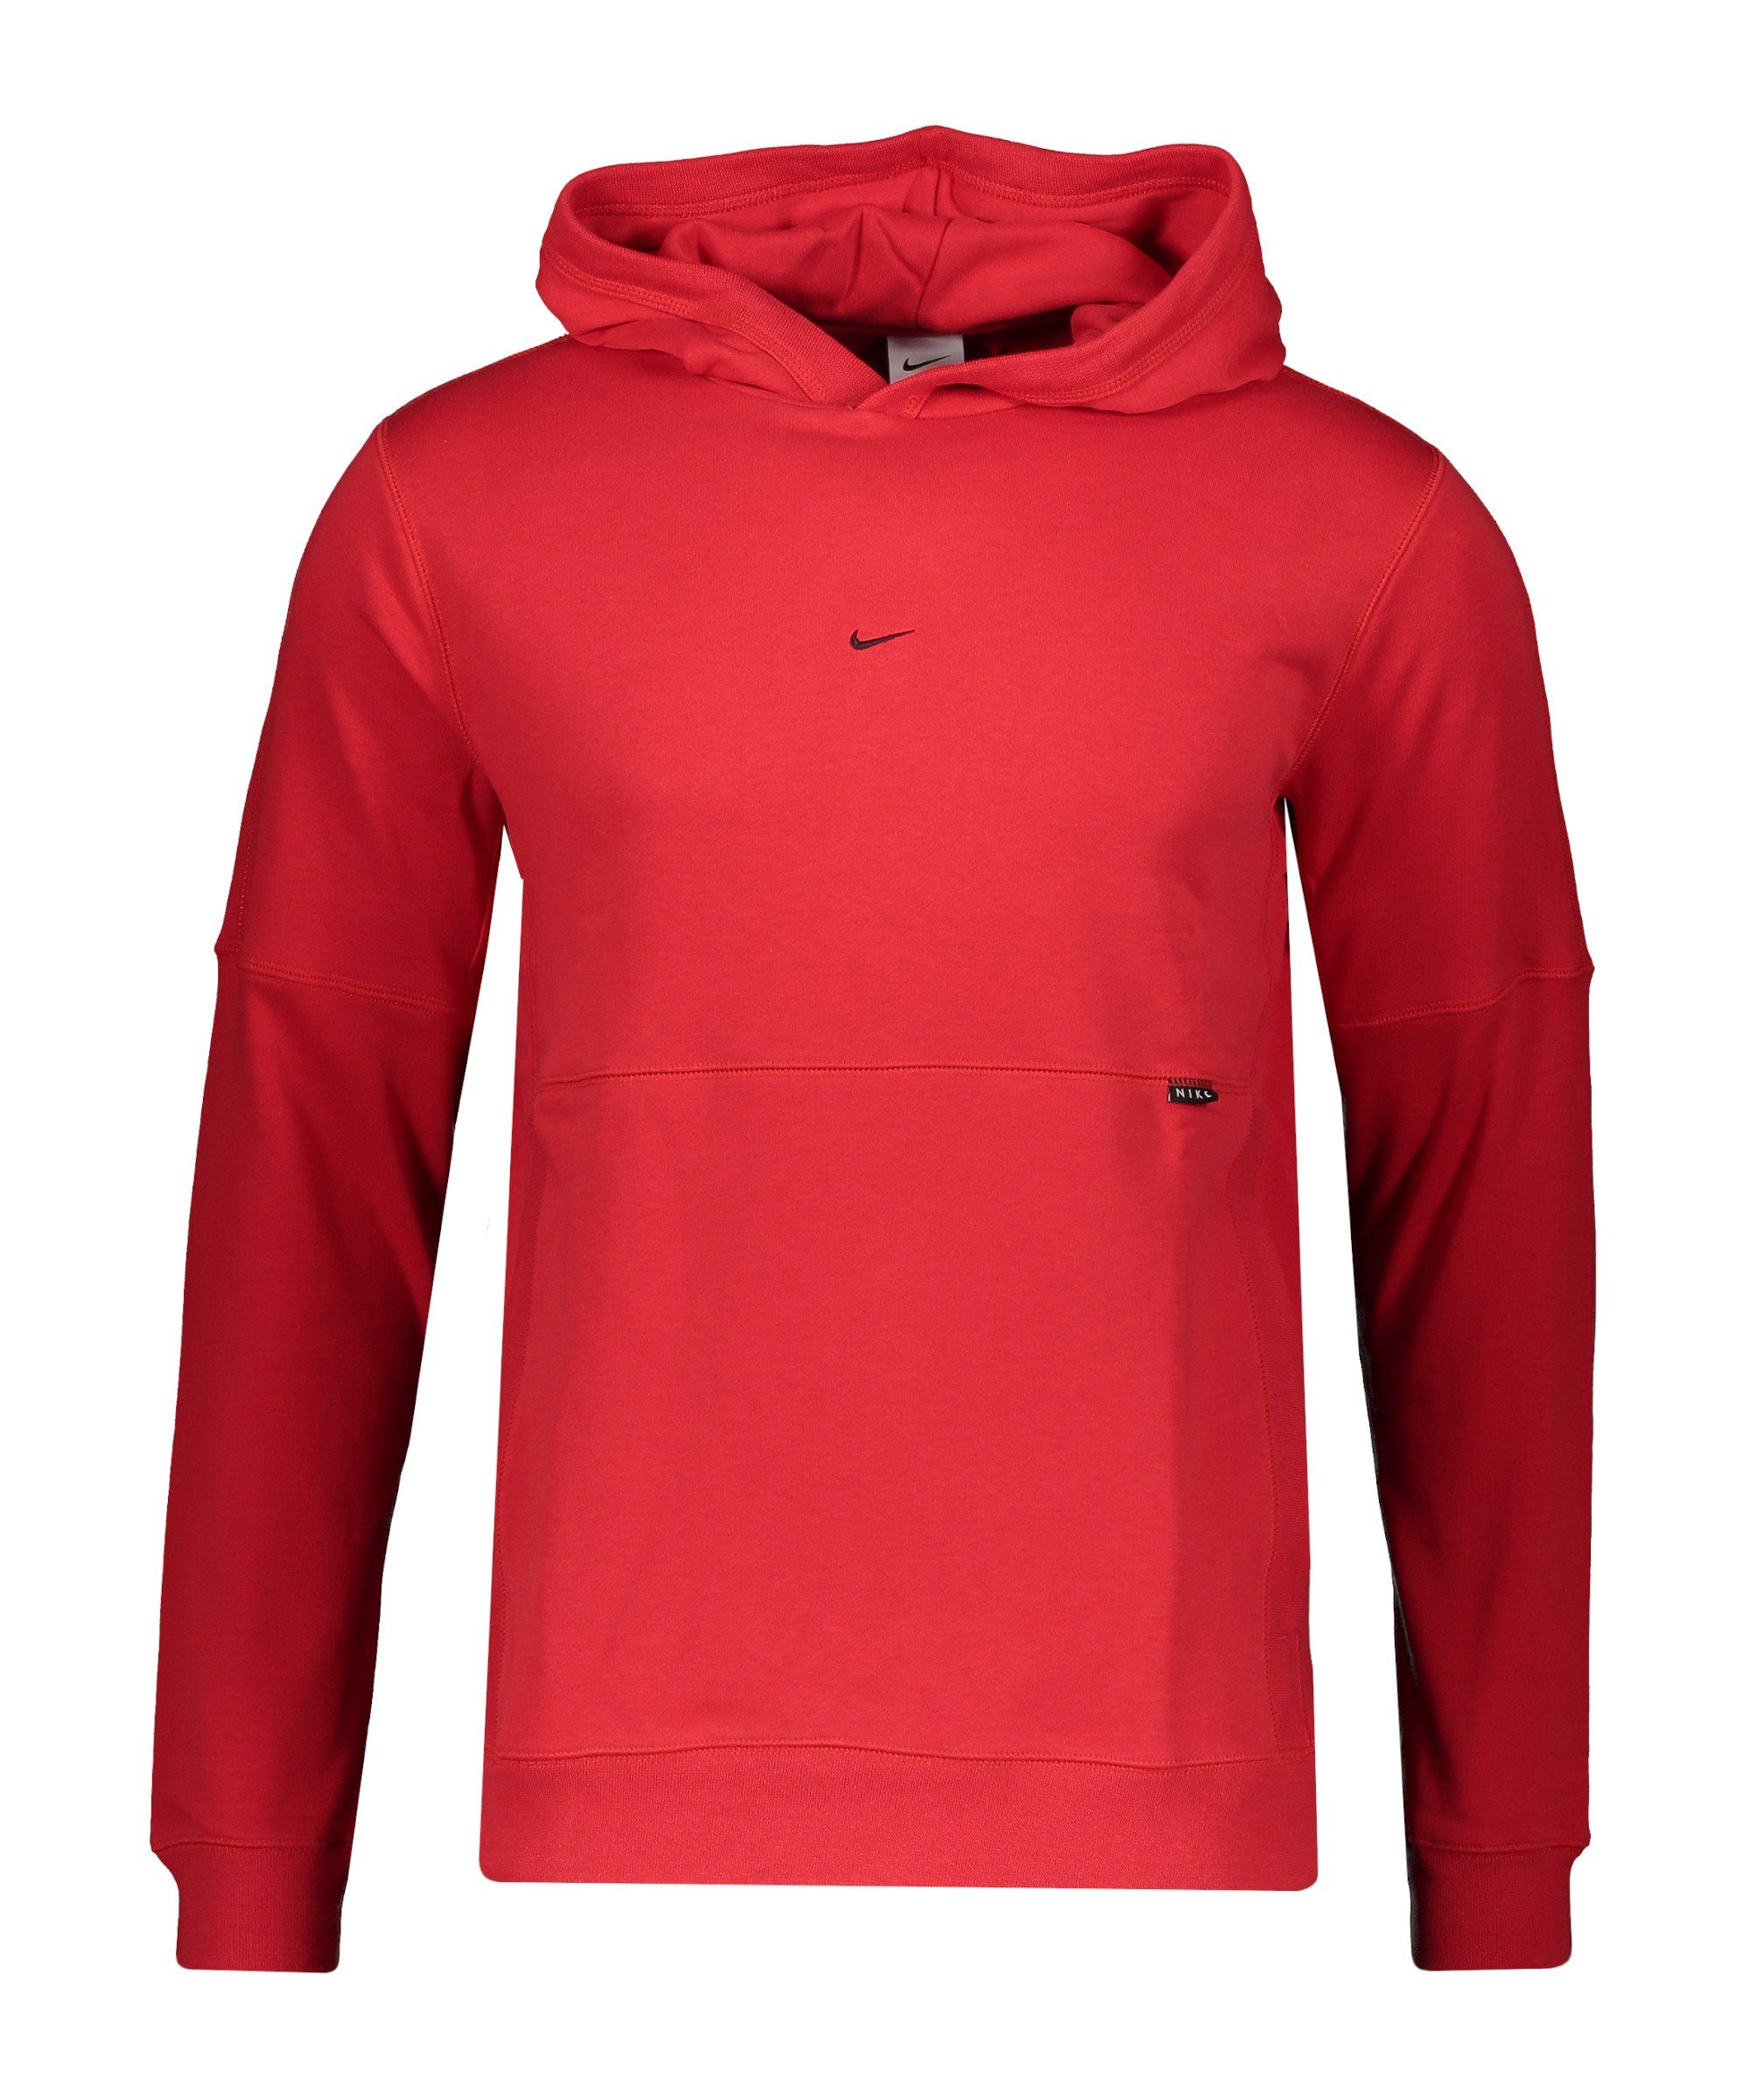 rotschwarz Nike Strike Hoody 22 Sweatshirt Express